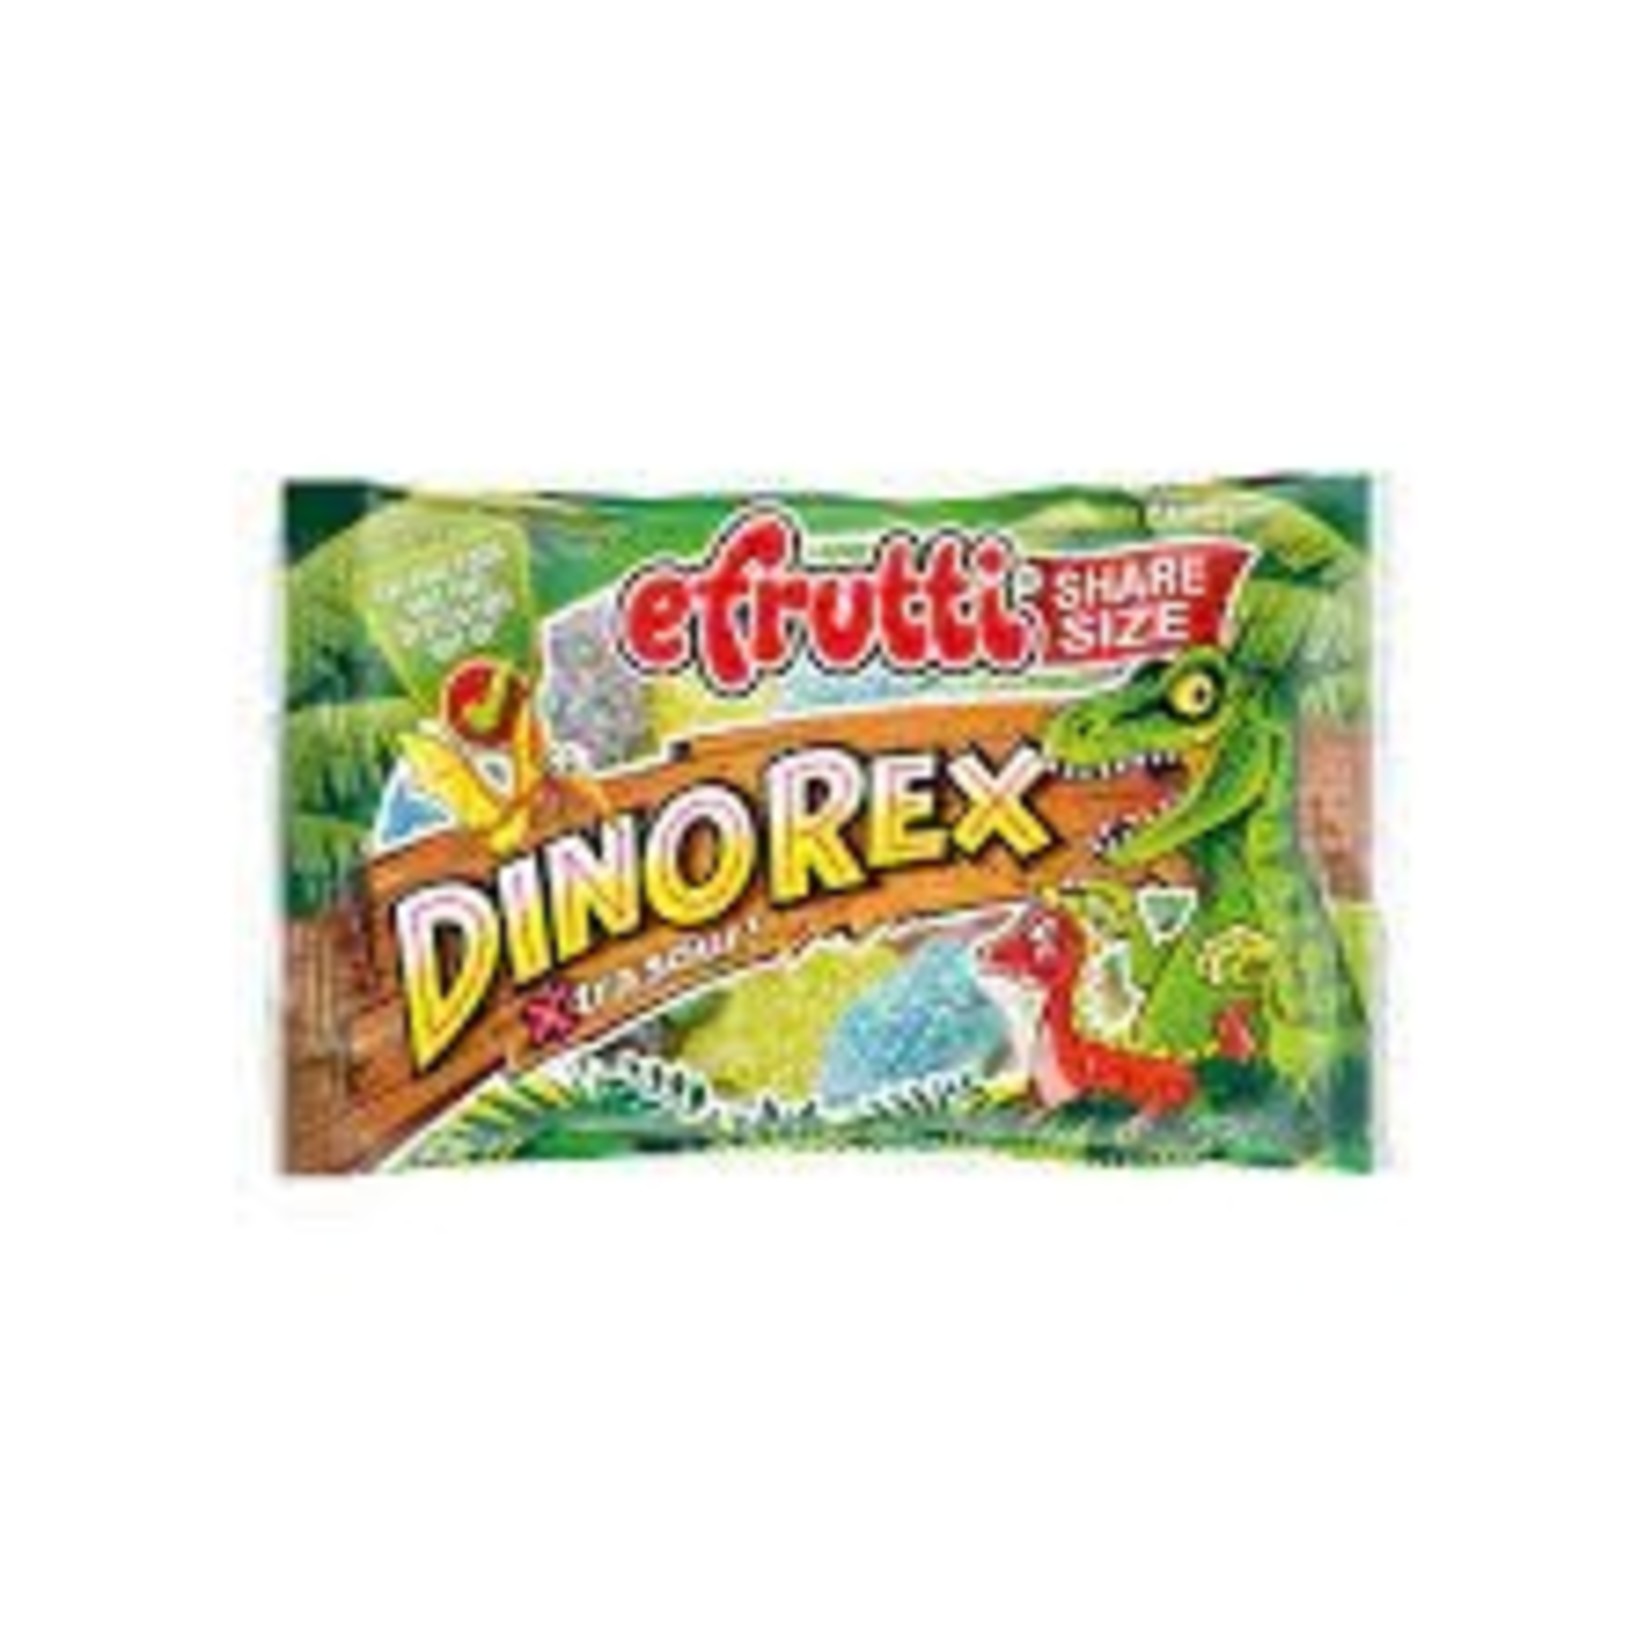 efrutti Dino Rex Xtra Sour Gummi Share Size 12ct